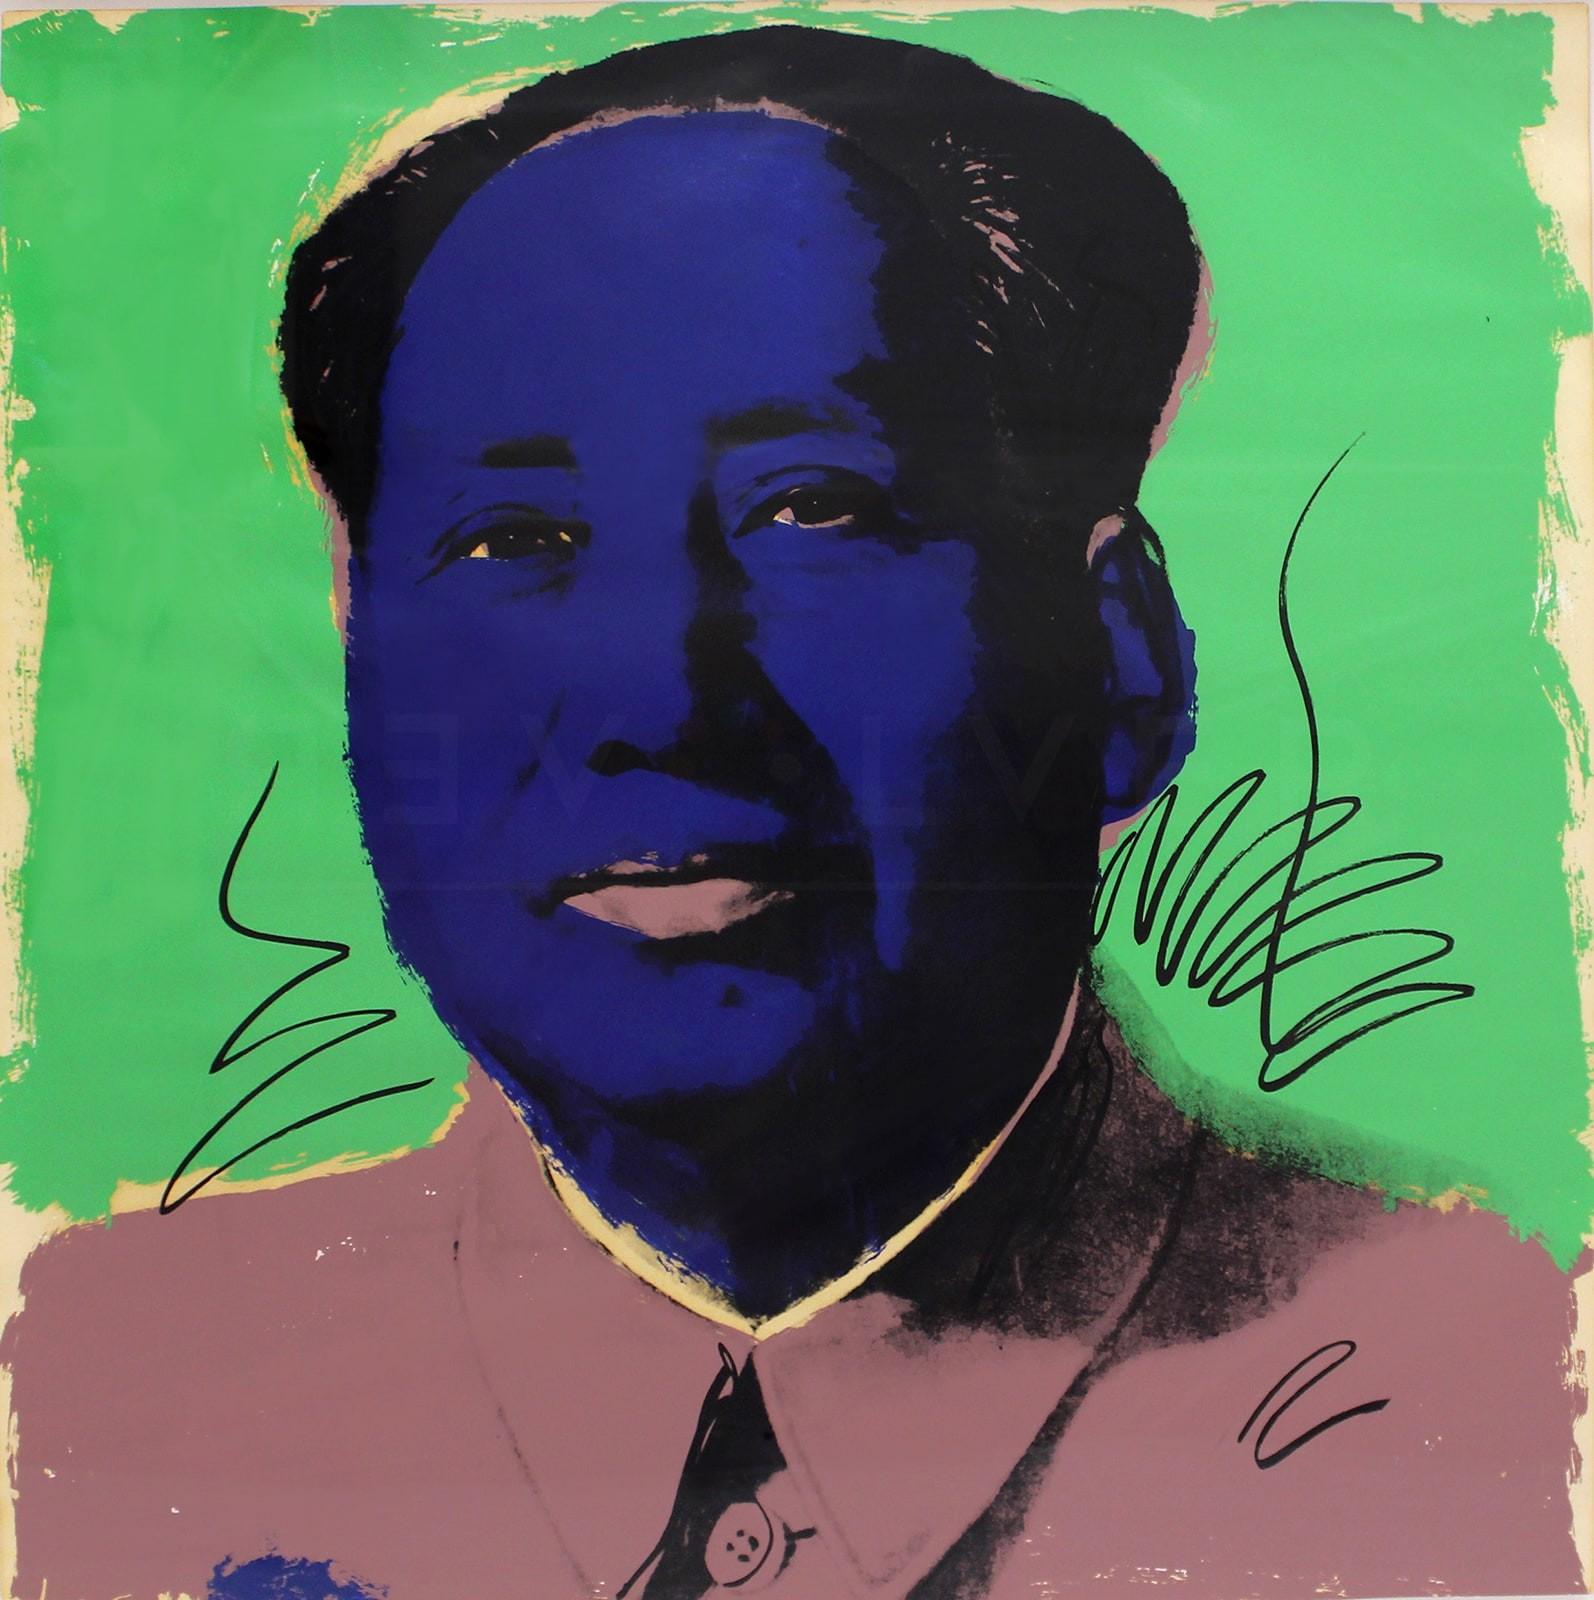 Mao Signed & numbered screenprint FS II.90 - green & blue - Mao Zedong 1972